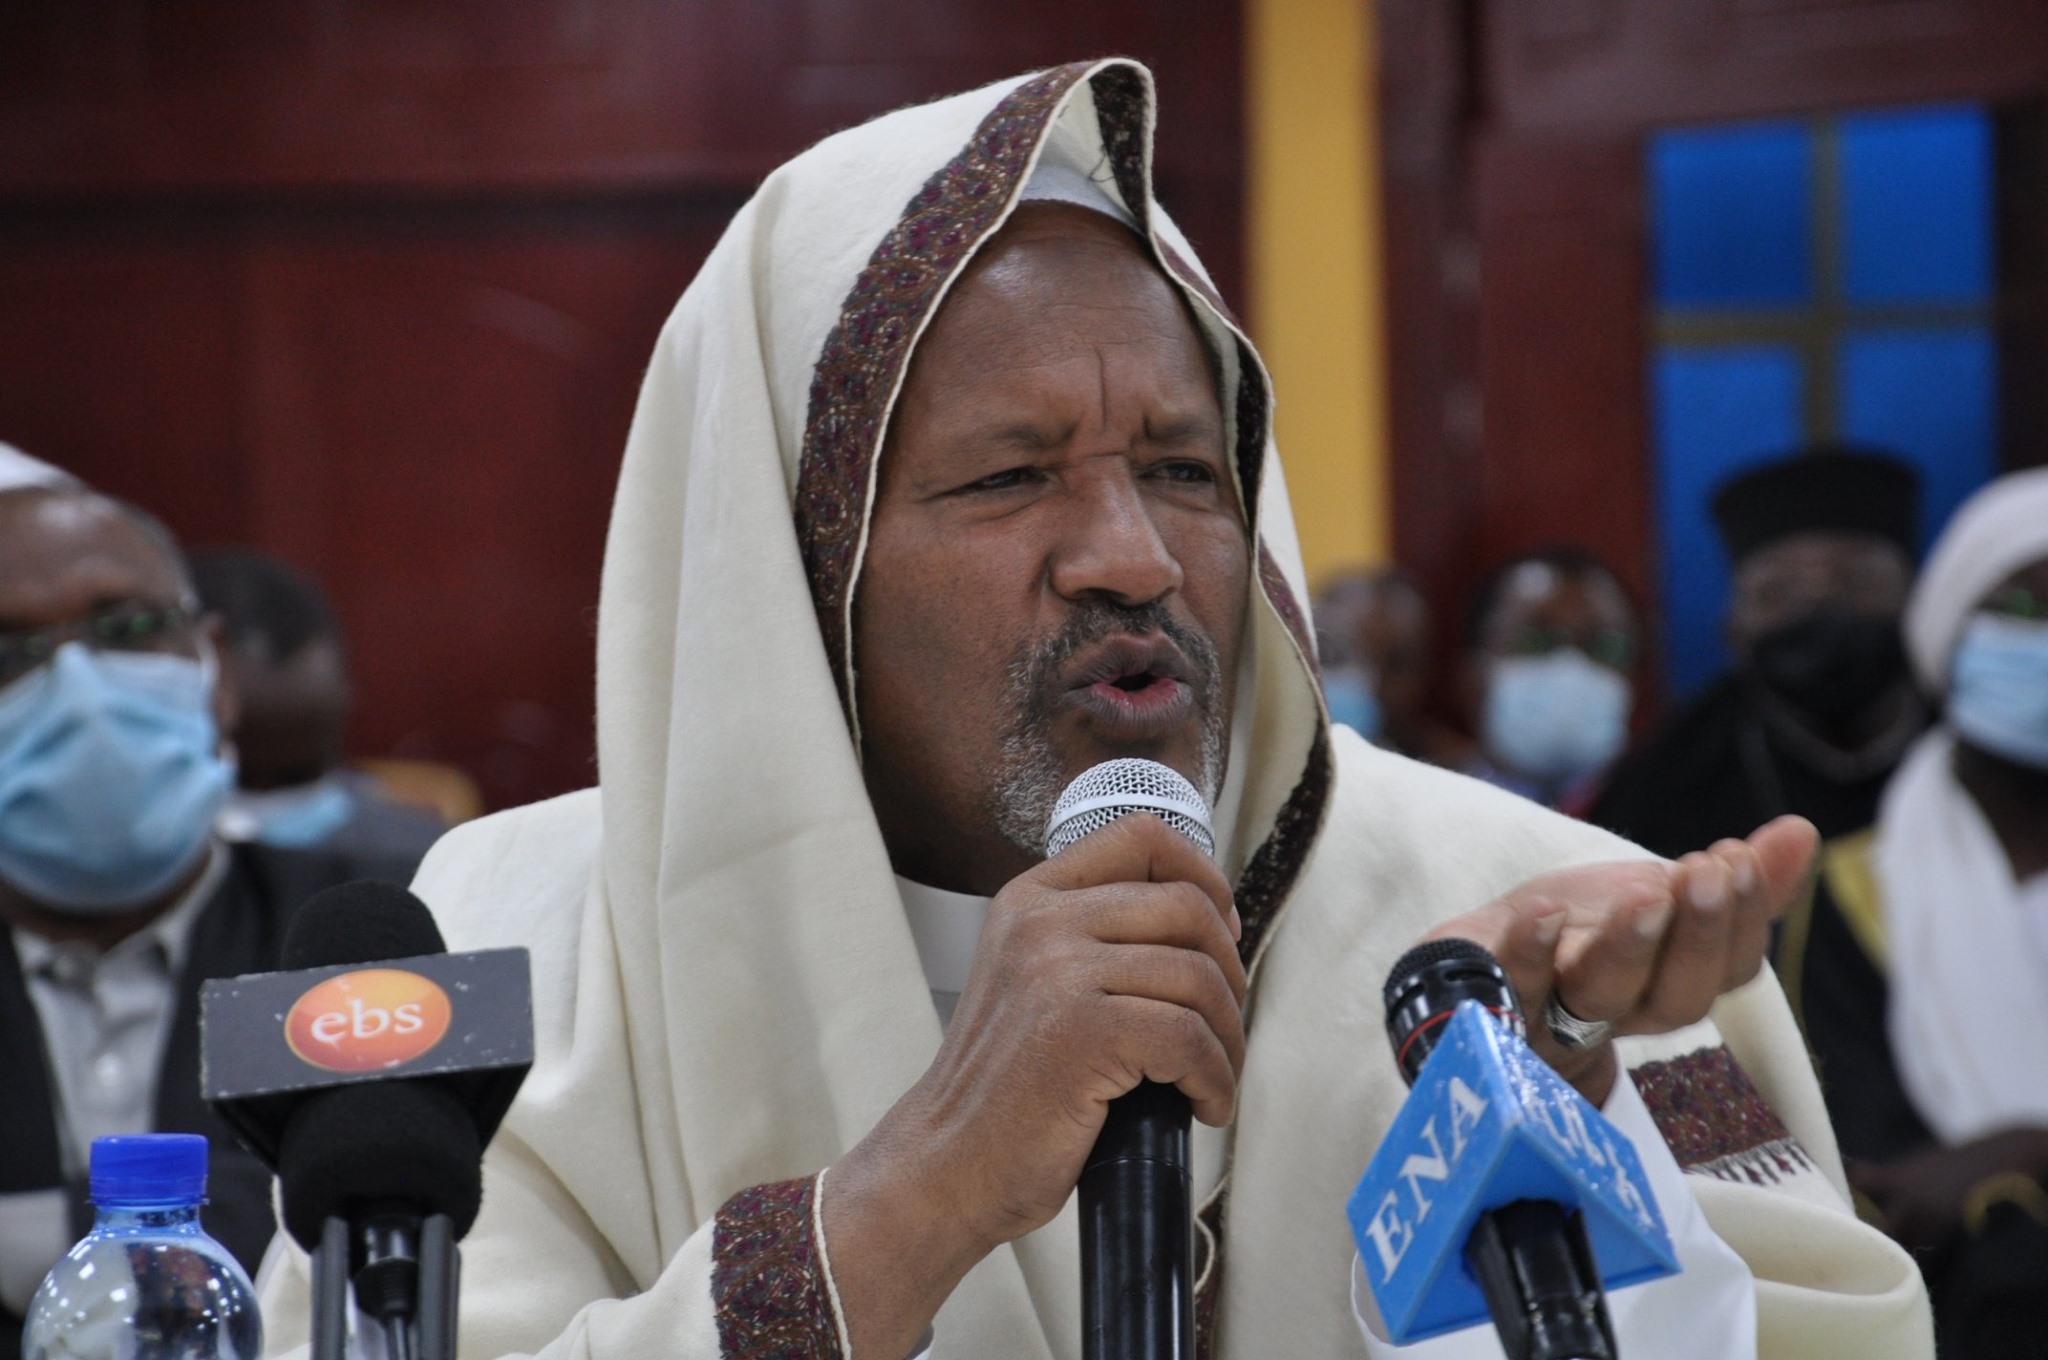 Inter-Religious Council of Ethiopia